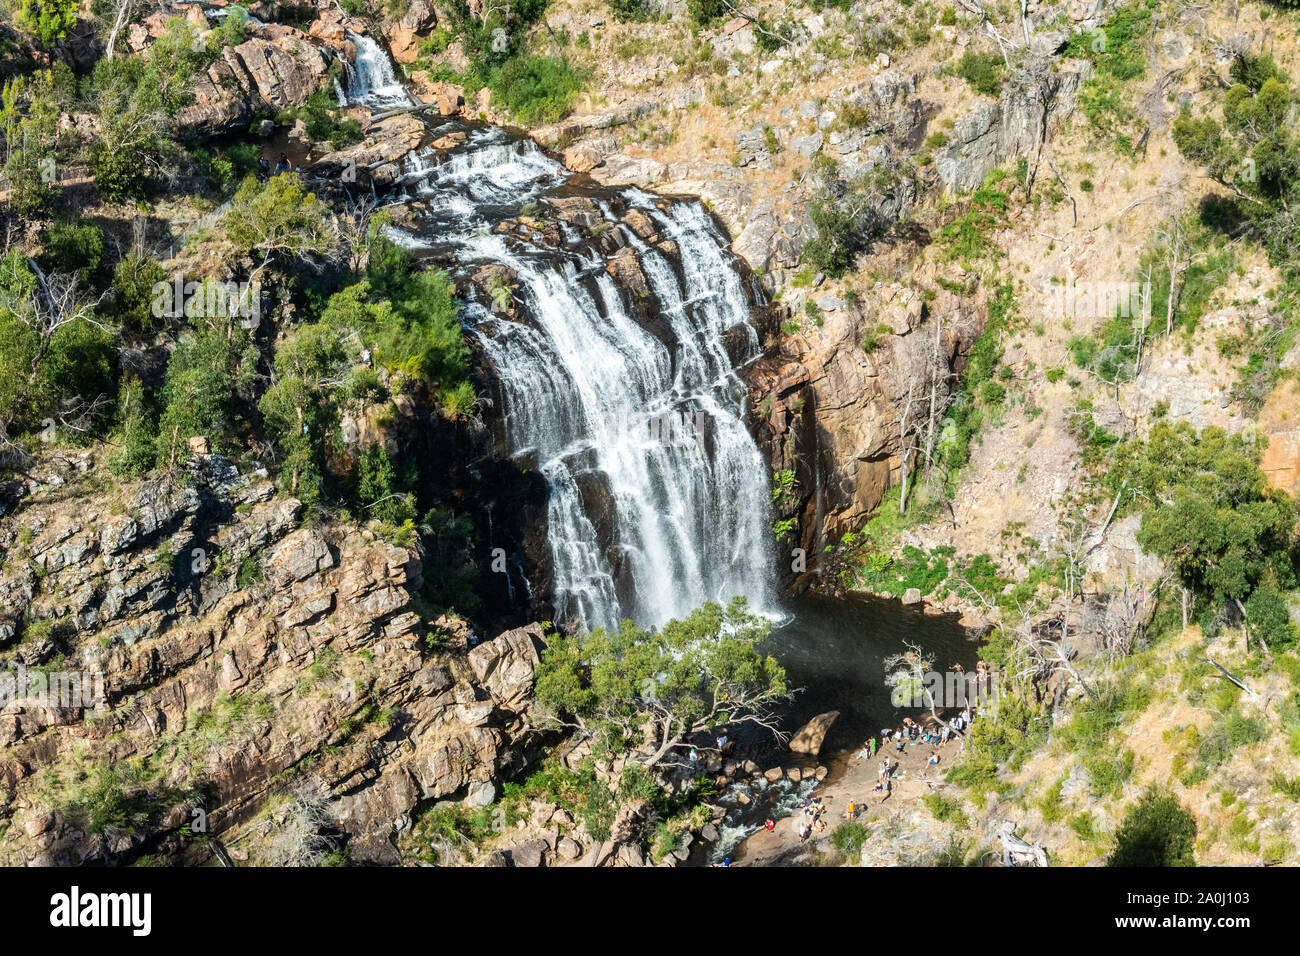 MacKenzie Waterfalls in the Grampians region of Victoria, Australia. Stock Photo